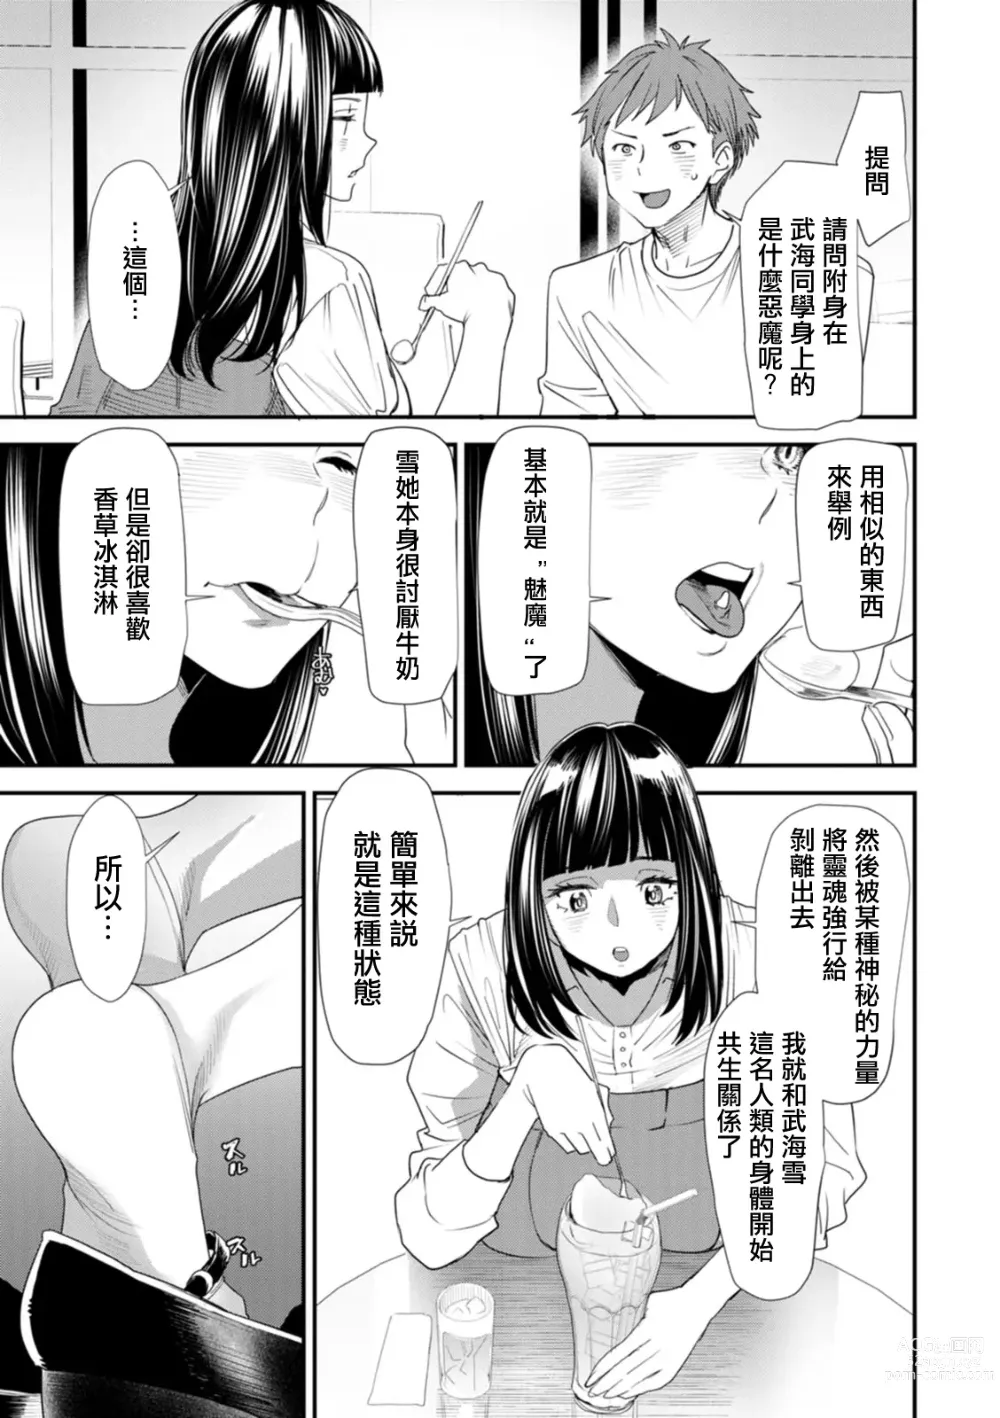 Page 5 of manga 淫魔女子大生の憂鬱 第三話 淫魔和主上